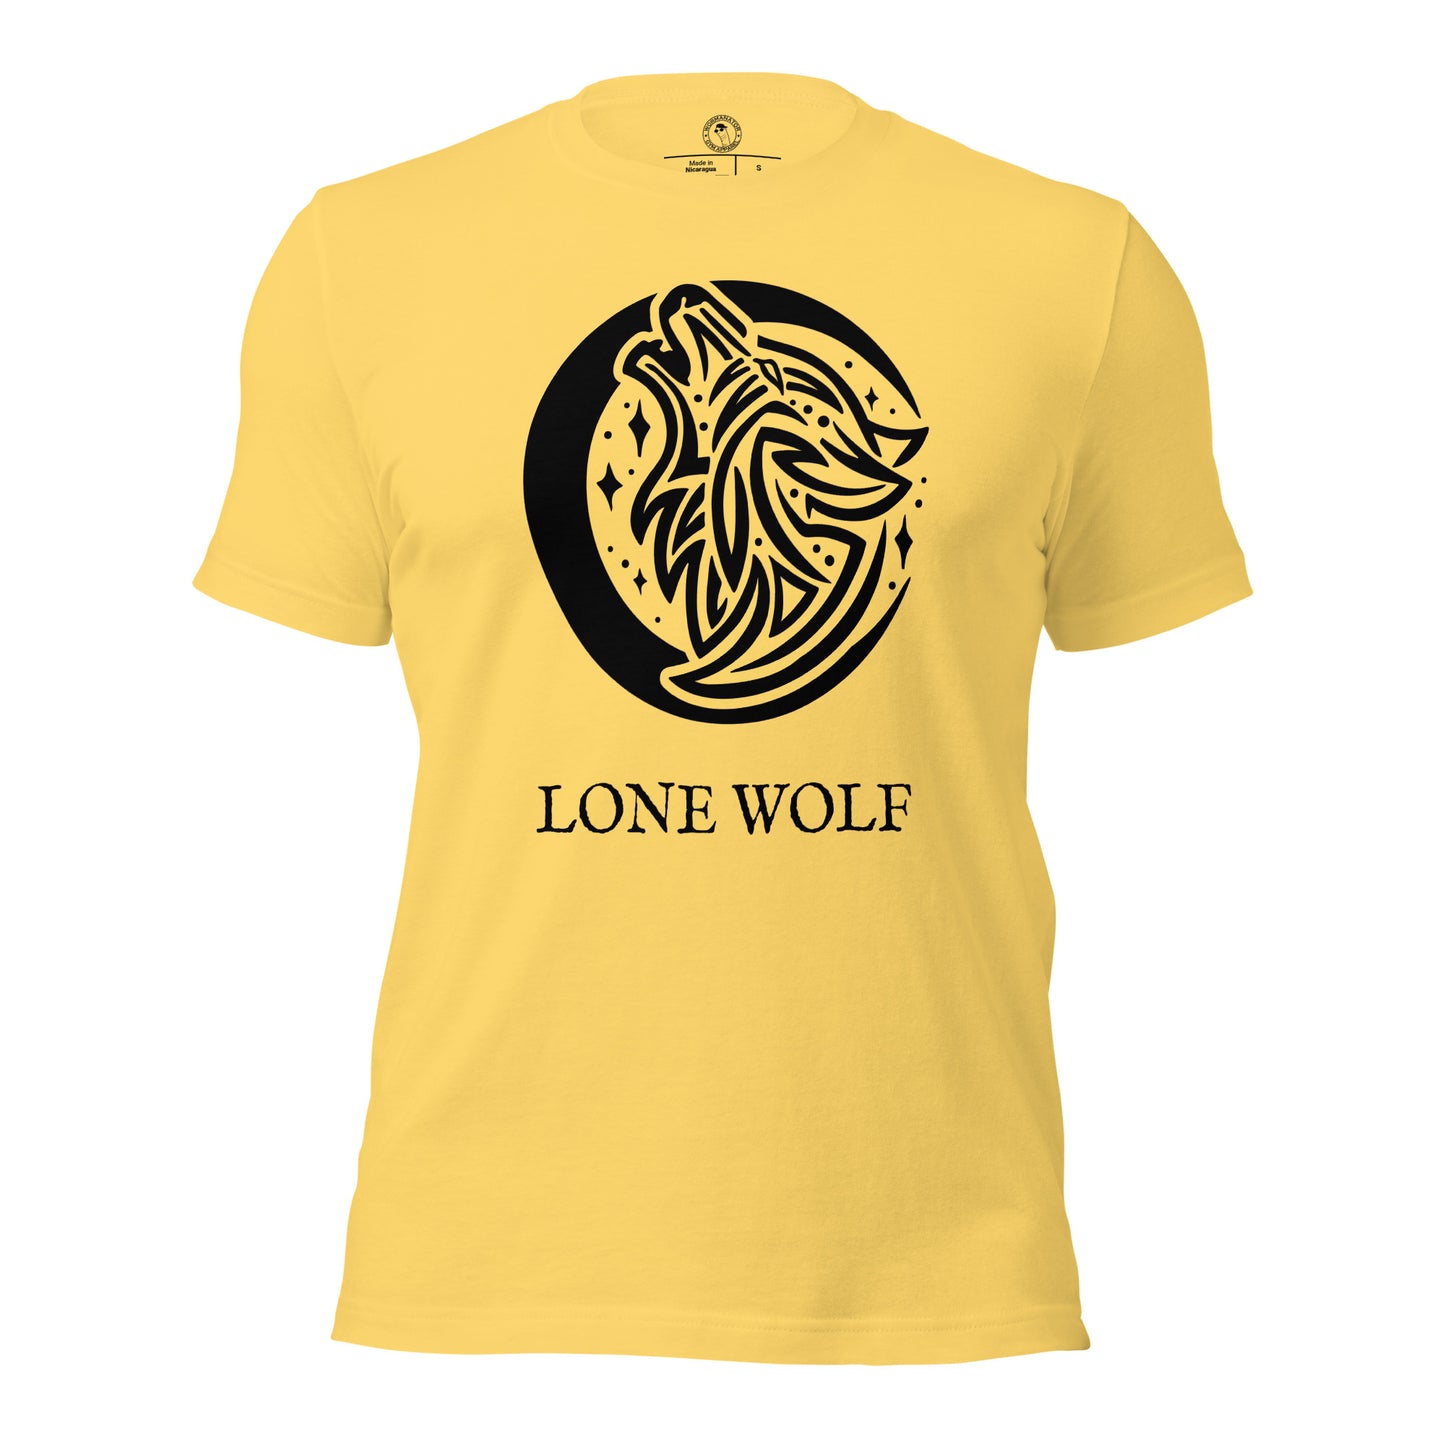 Lone Wolf Shirt in Yellow